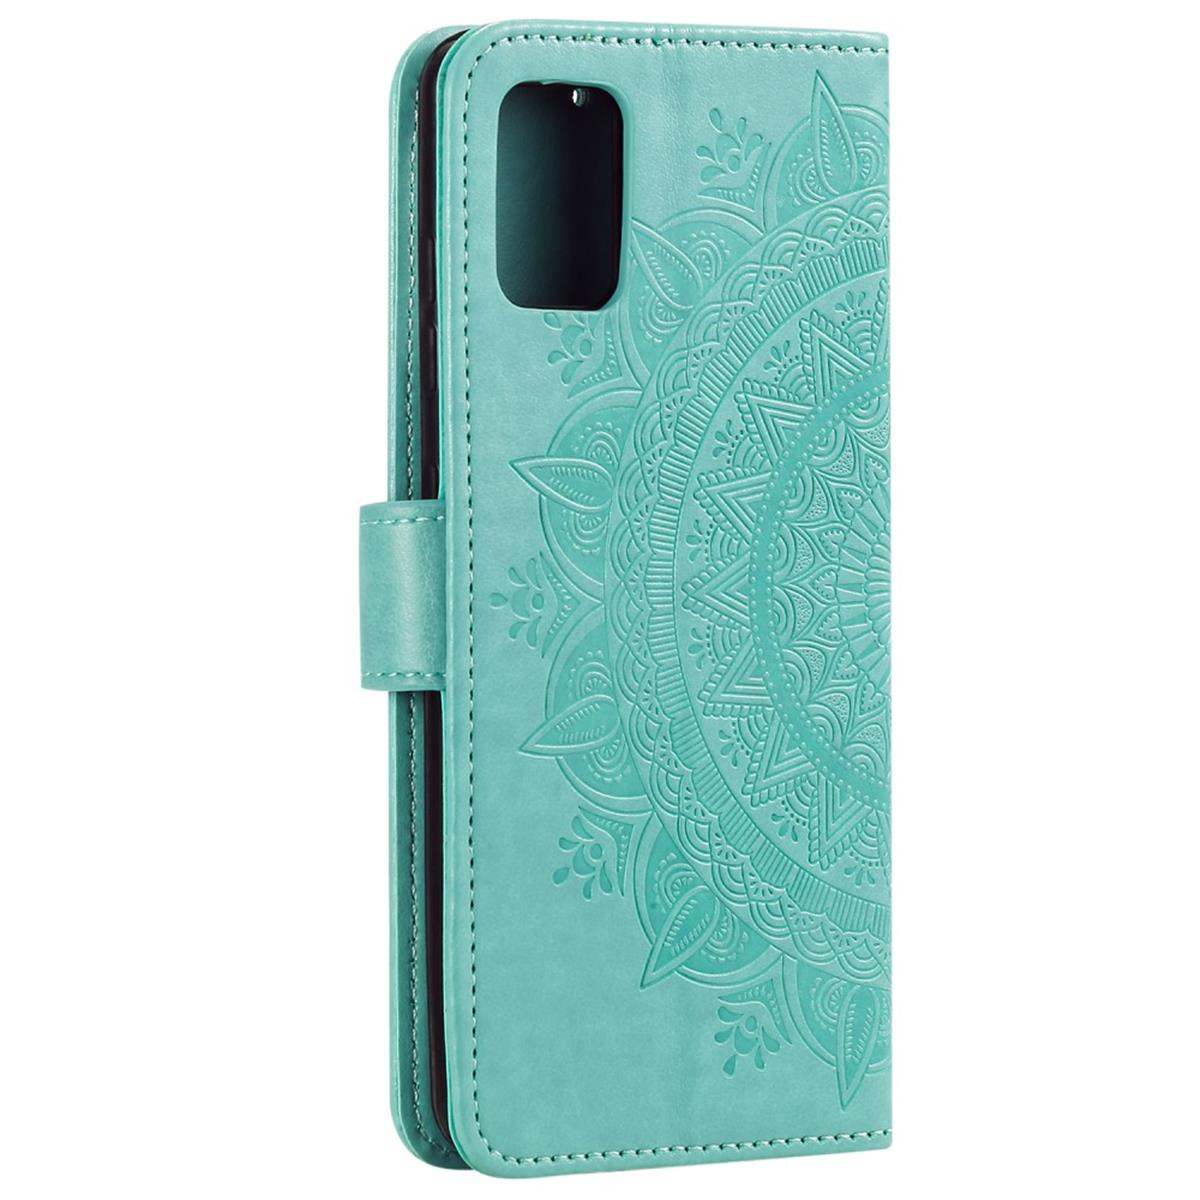 Hülle für Samsung Galaxy Note10 Lite Handyhülle Flip Case Schutzhülle Cover Mandala Grün